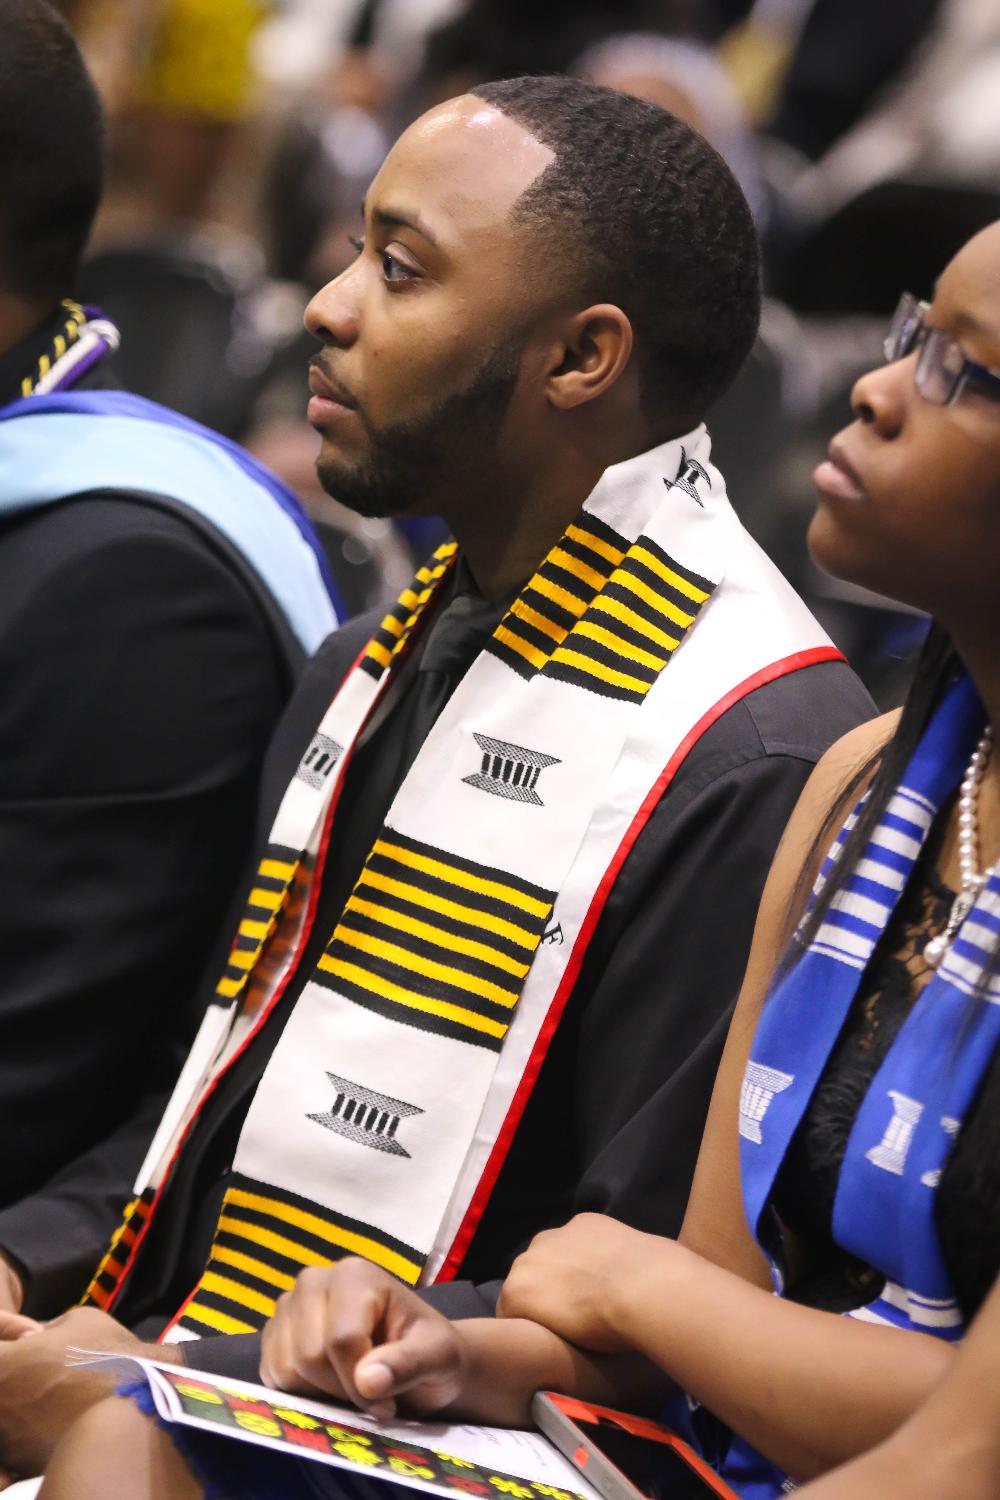 Black Graduate listening